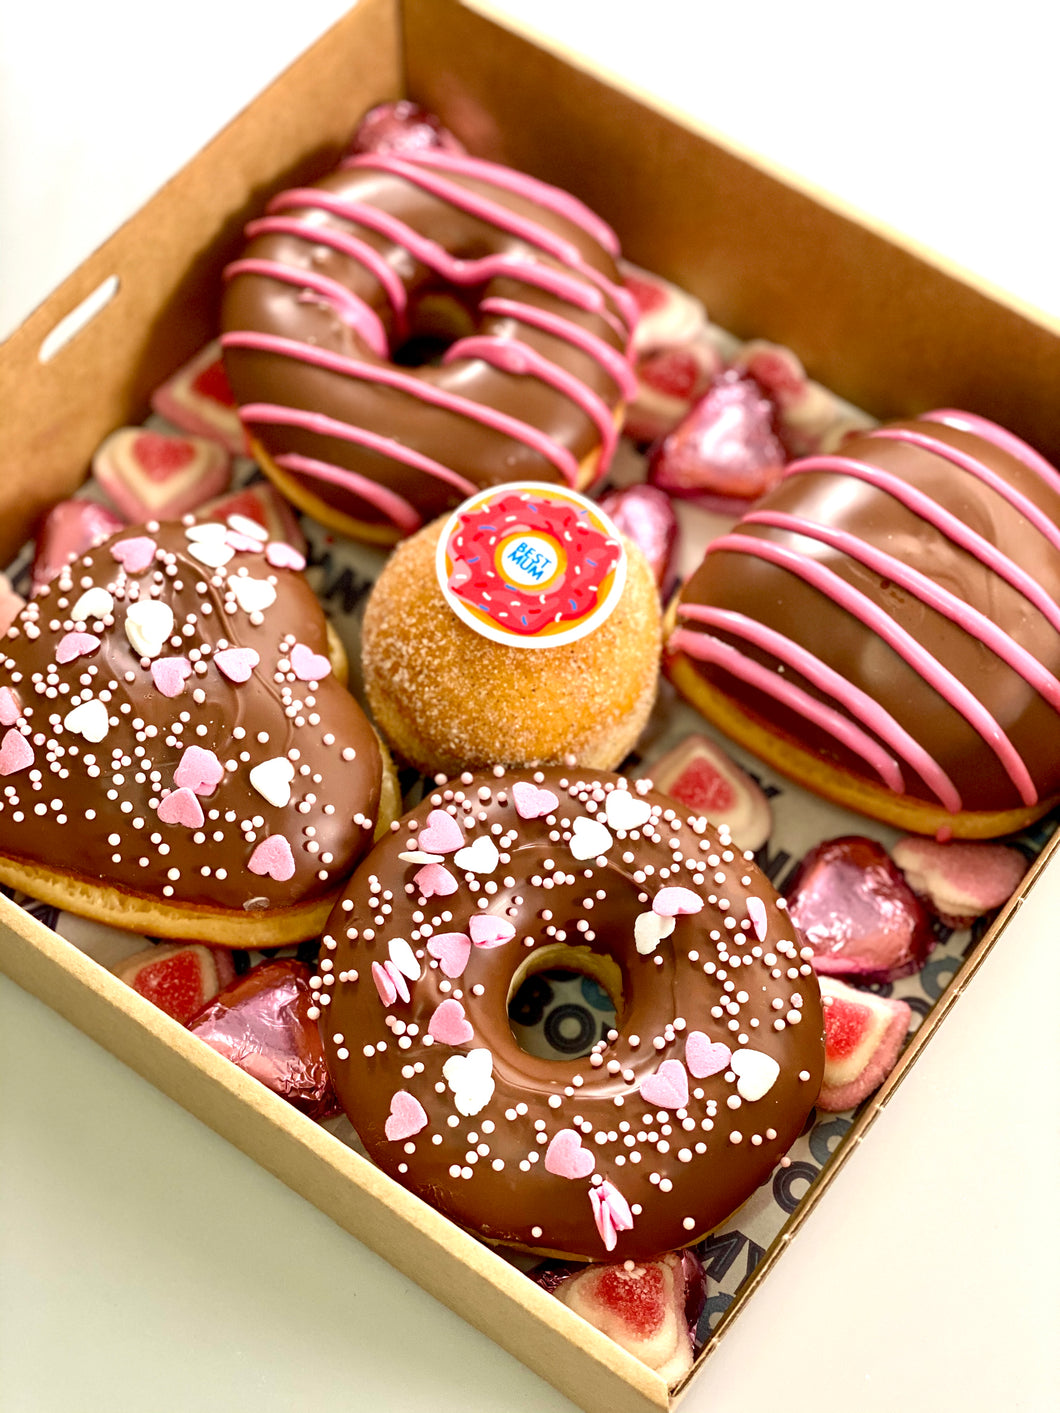 Mums Choc Nutella Donut 5 Pack (Best Mum)